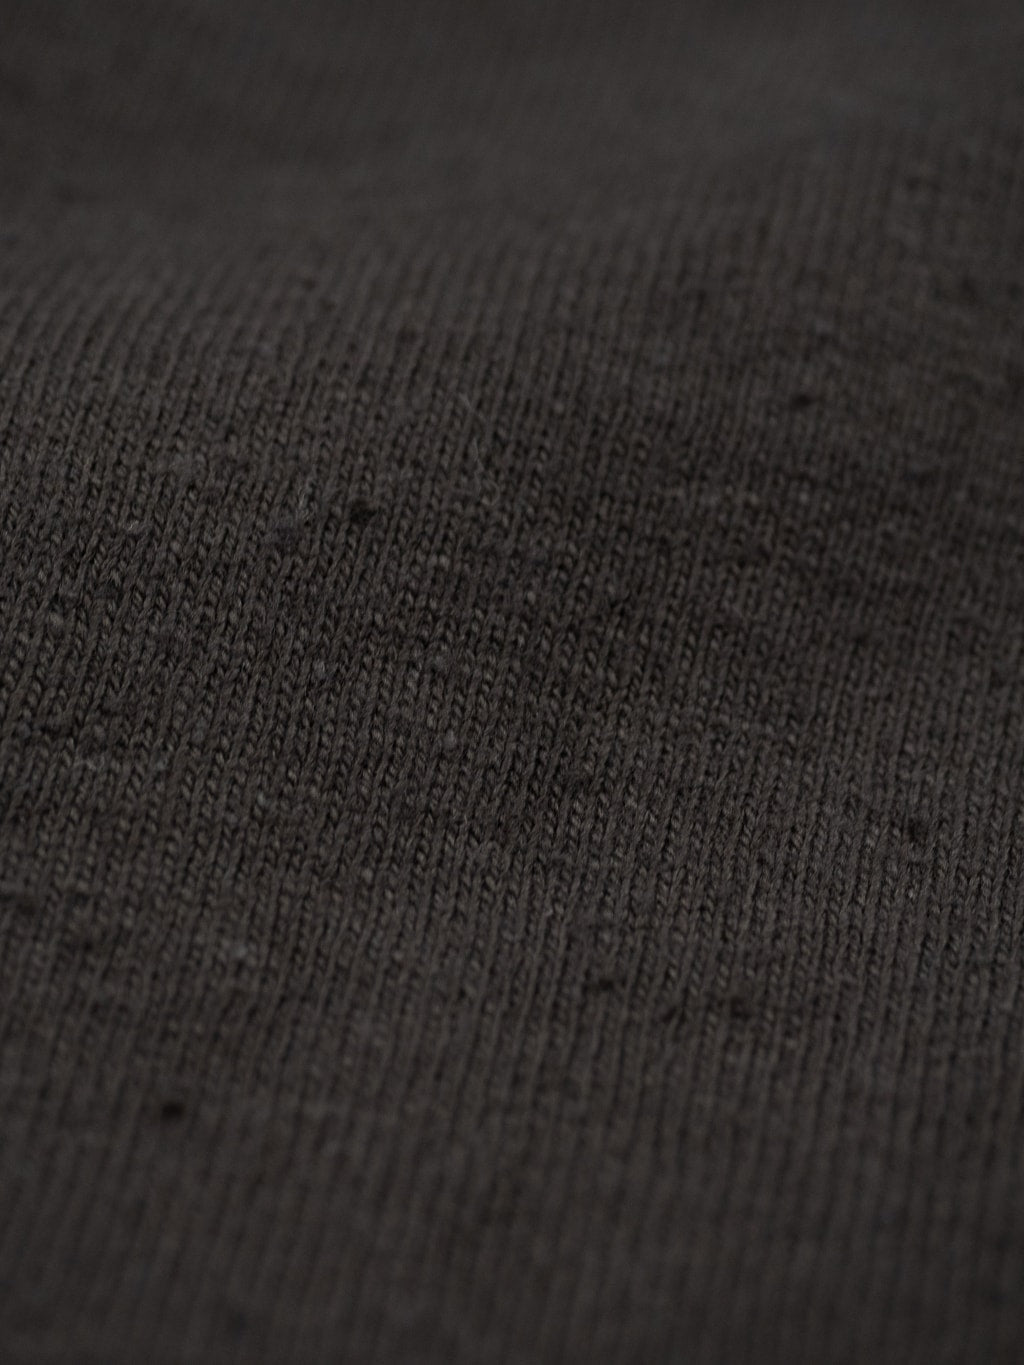 samurai jeans japanese cotton slub neck tshirt kuromame black fabric